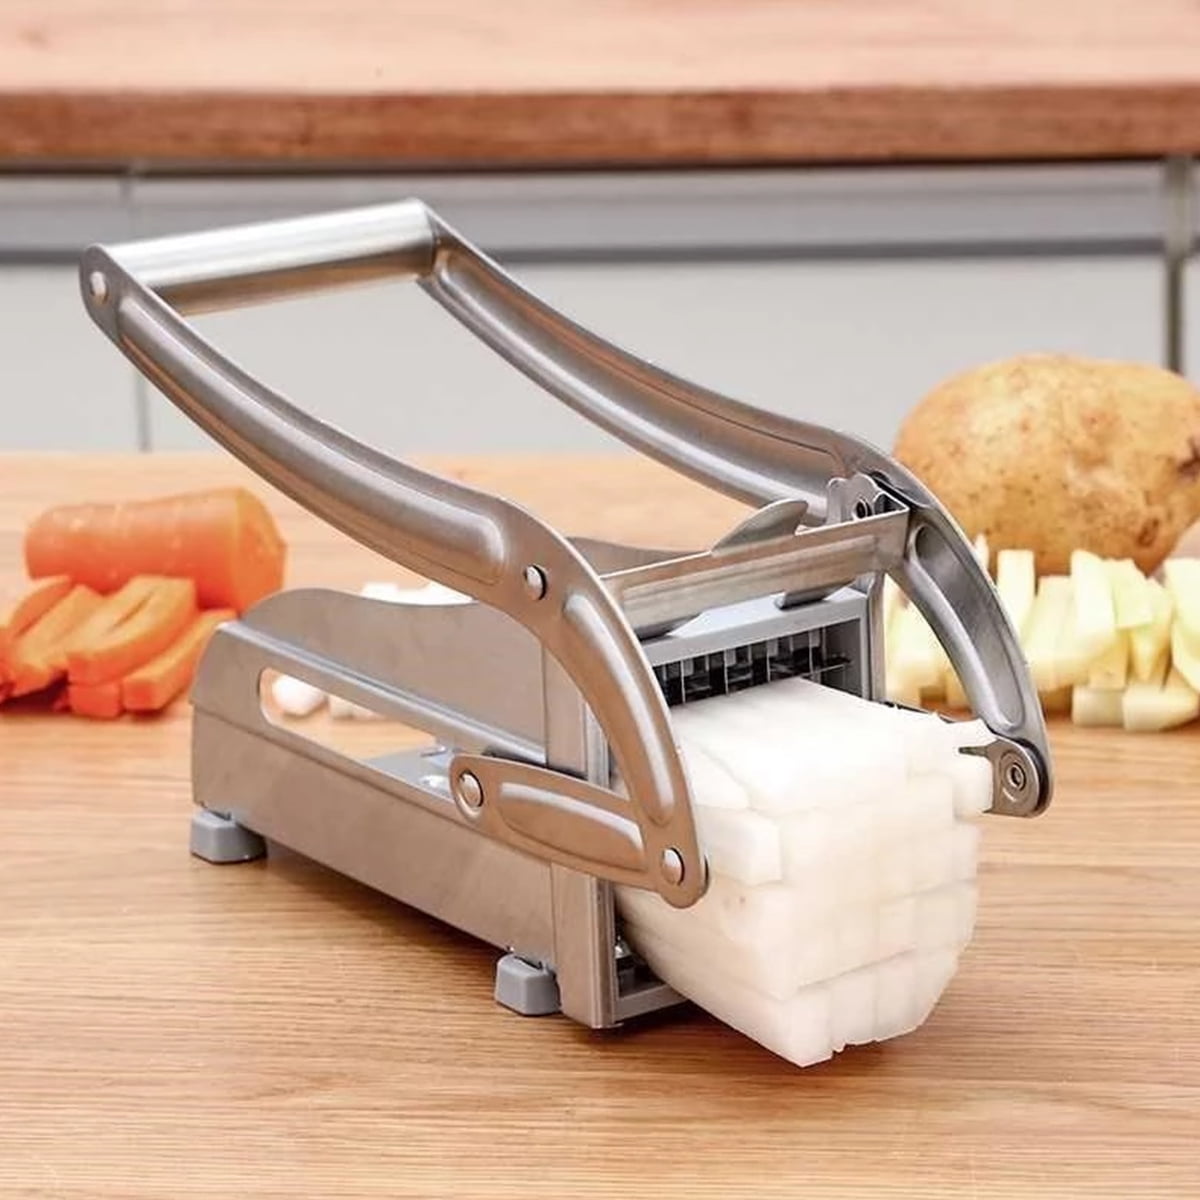 Powerlift Potato Chipper-Stainless Steel 5in 1 Potato Chopper Cutter Fruit Chip Cutter French Fry Tool Effort-saving Kitchen Gadgets